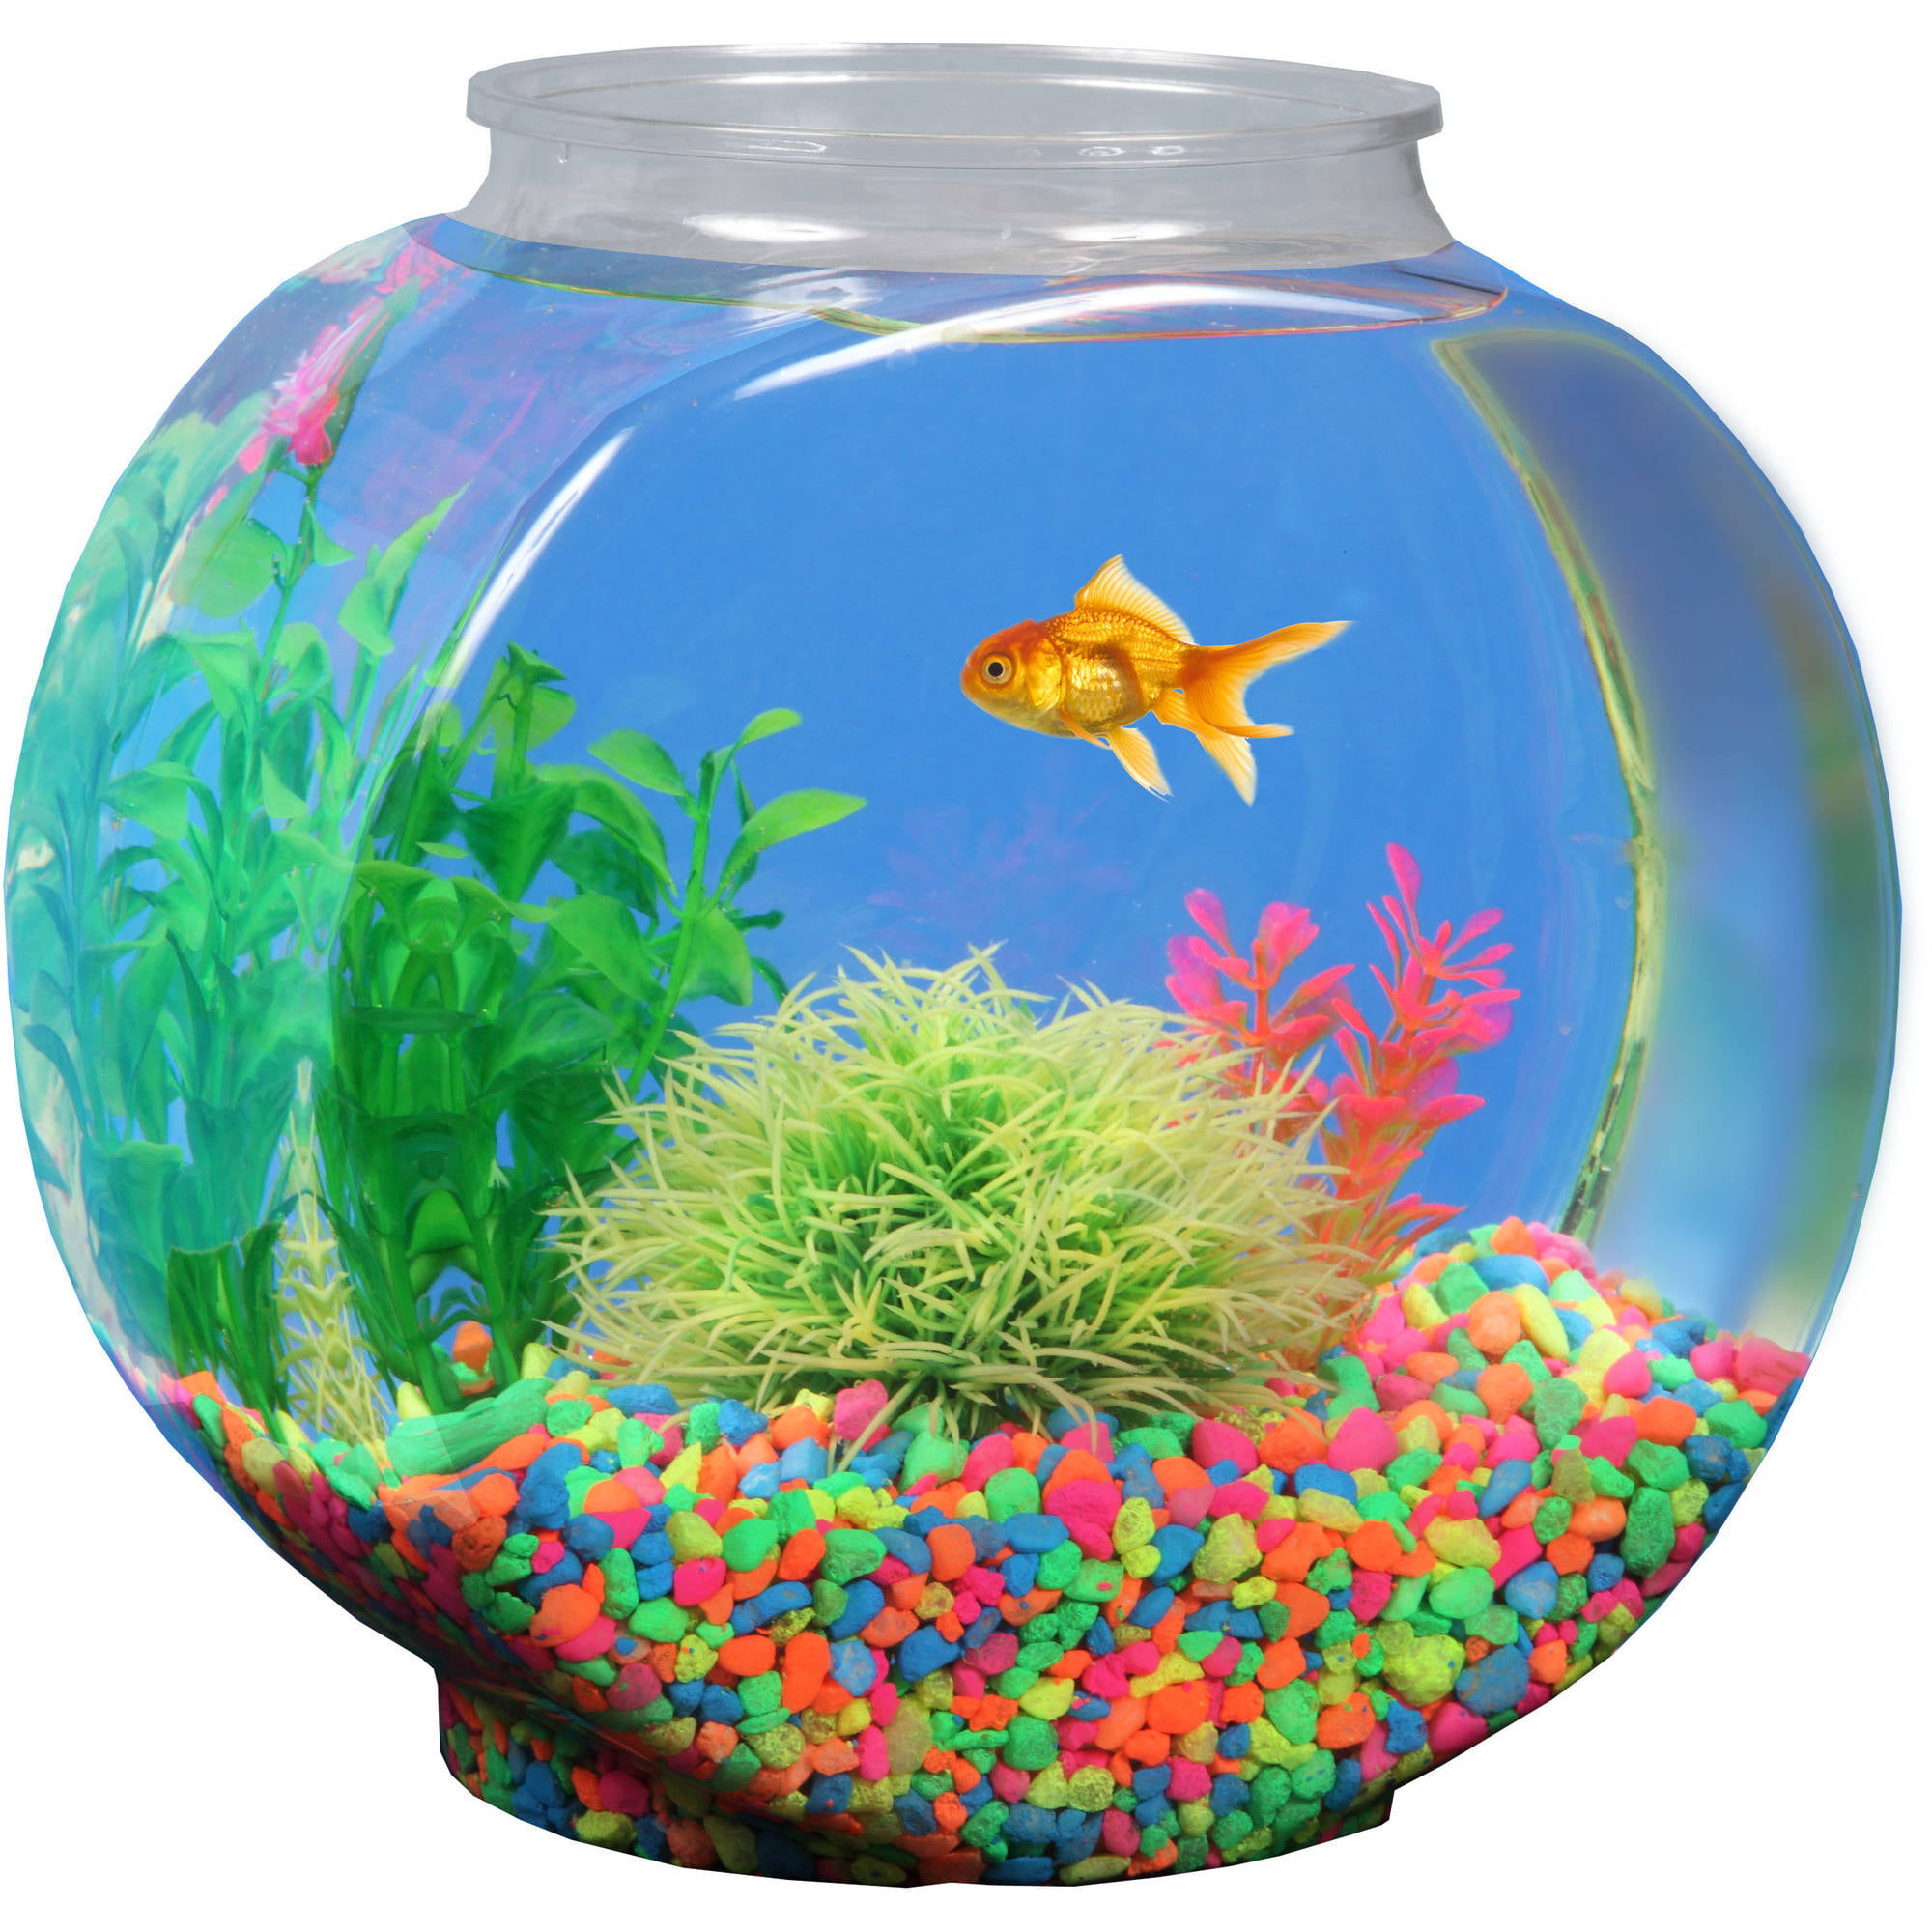 1-Gallon Fish Bowl, Impact-Resistant Plastic